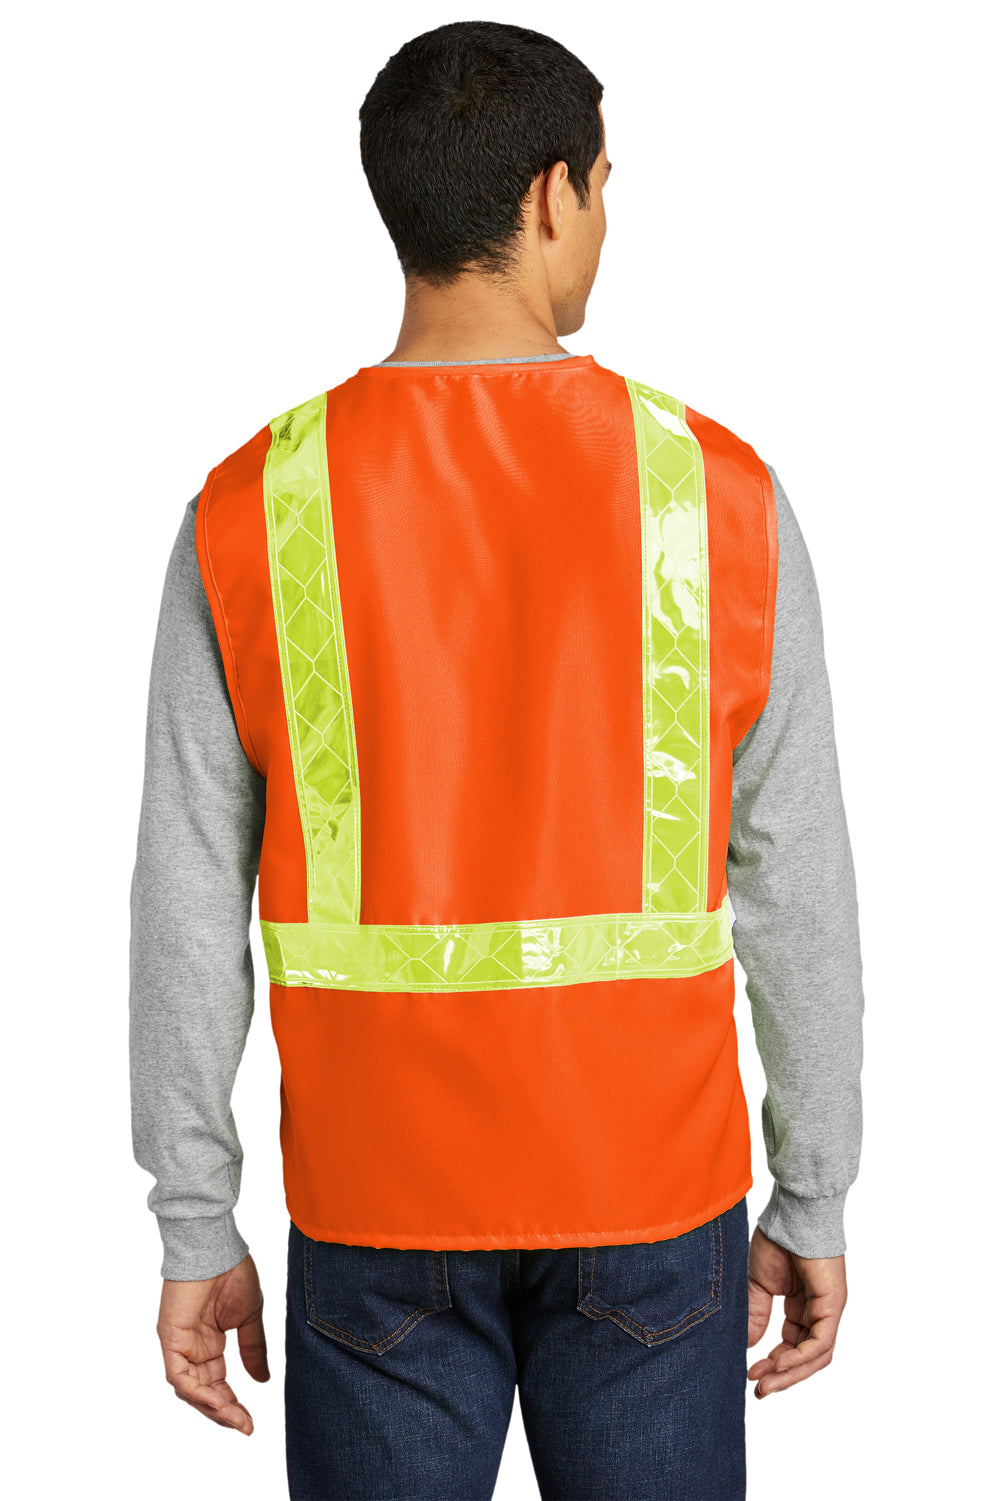 Port Authority SV01 Enhanced Visibility Vest Safety Orange Back